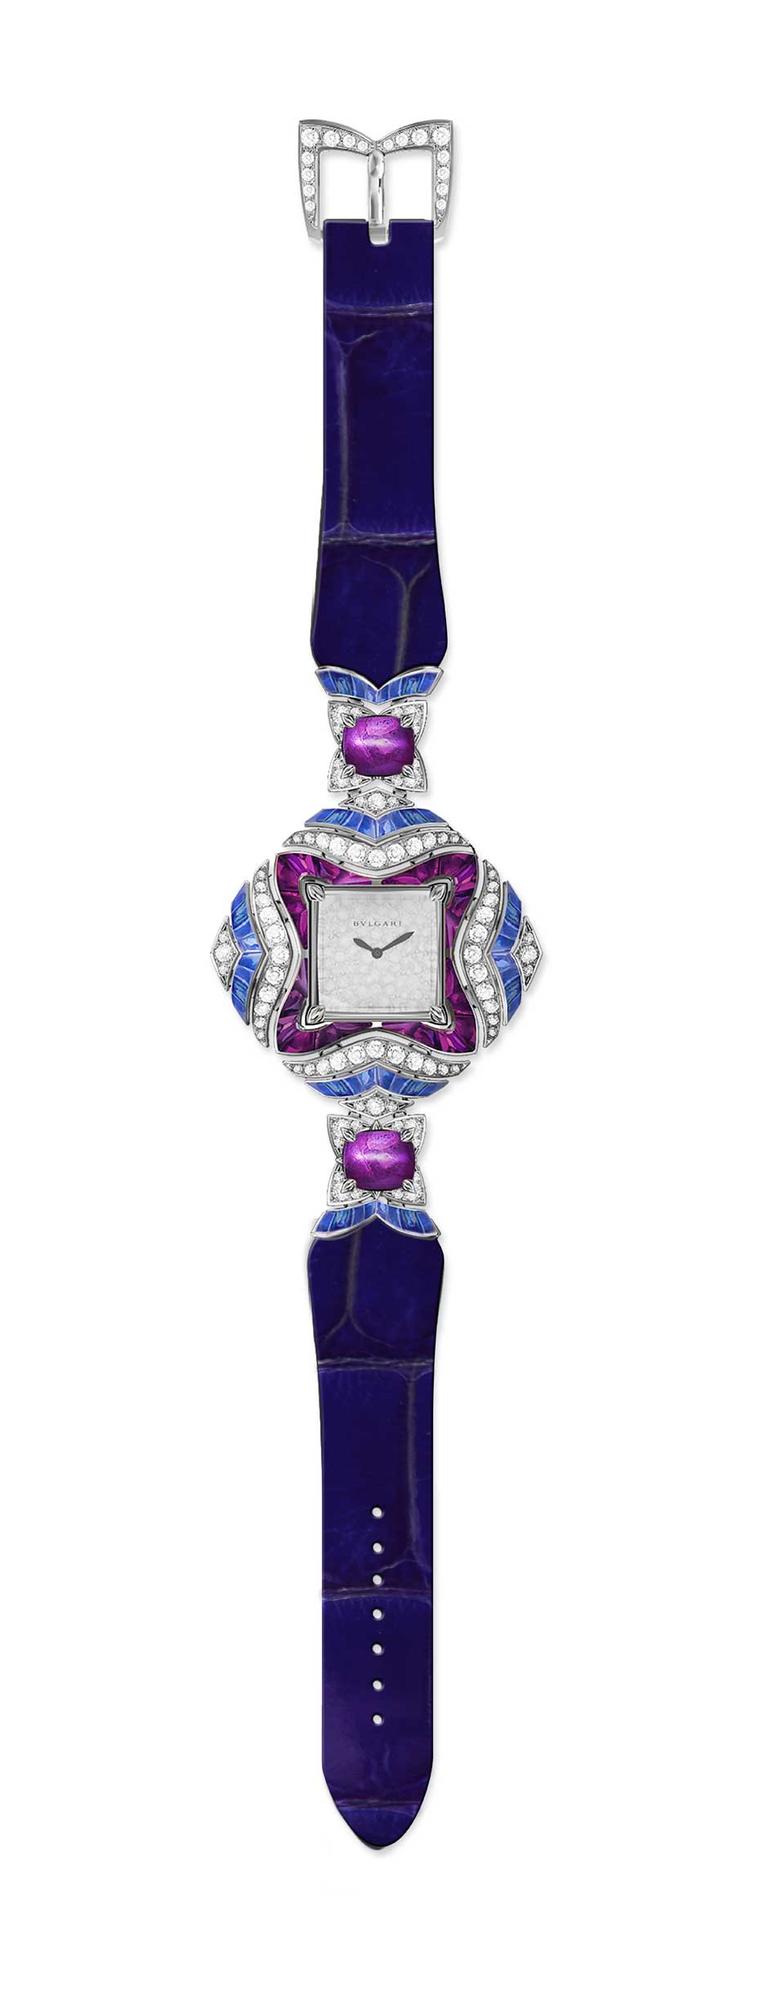 Bulgari Mvsa high jewellery watch with blue and pink sapphires and diamonds.